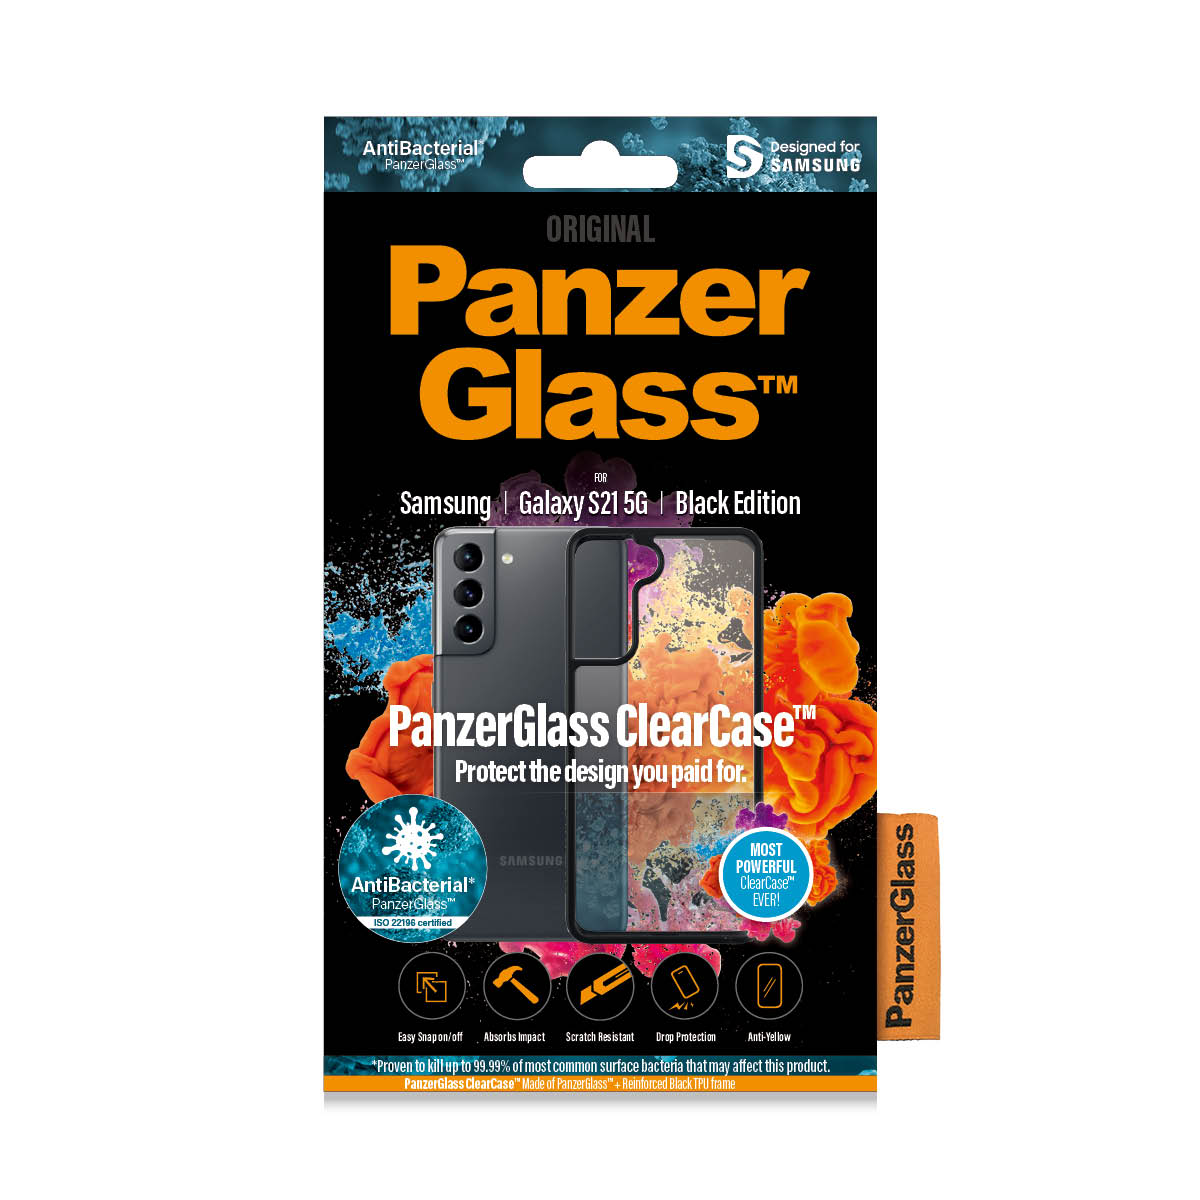 PanzerGlasstm ClearCasetm Samsung Galaxy S21 5G thumb